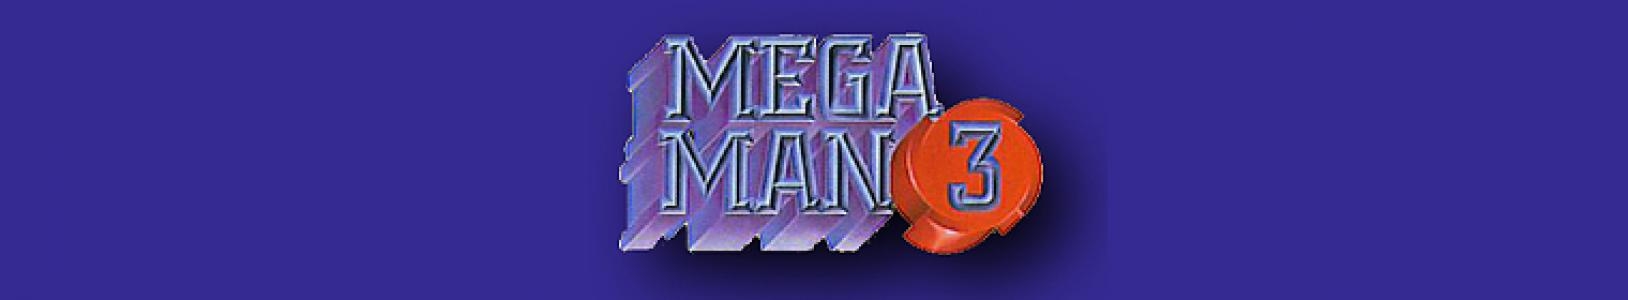 Mega Man 3 banner